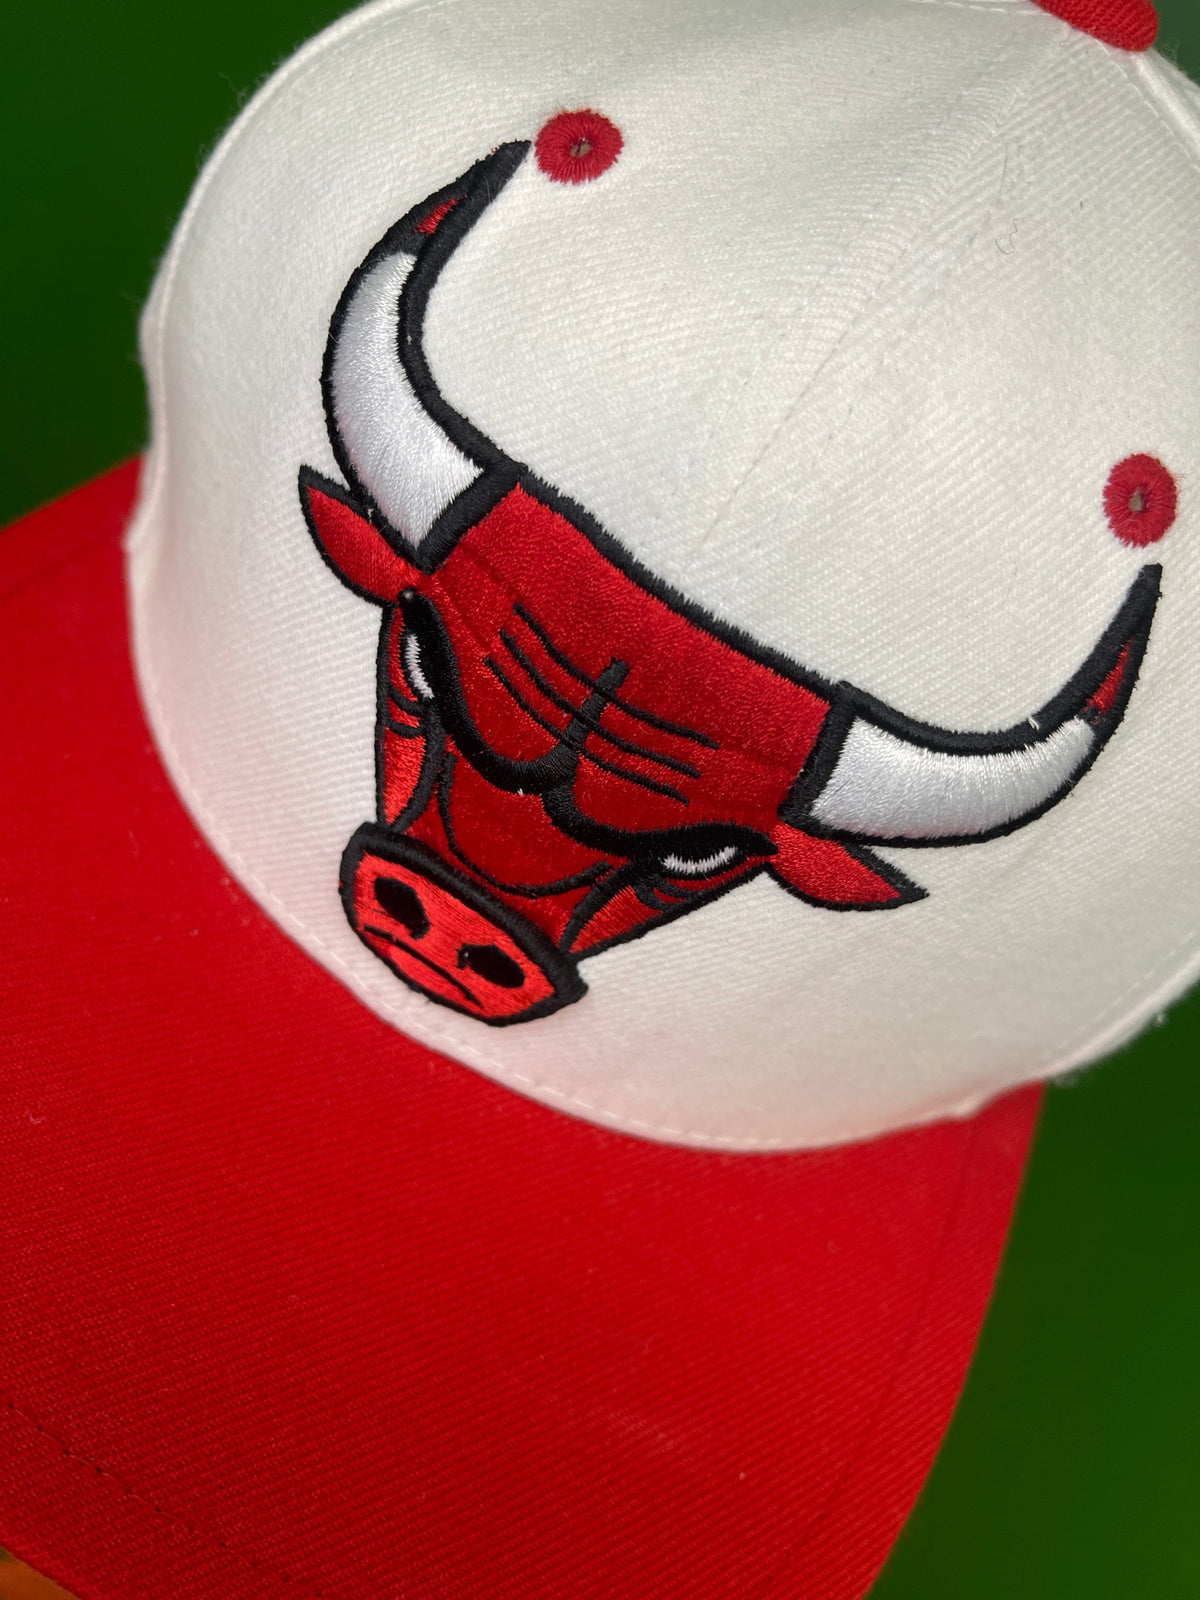 NBA Chicago Bulls Mitchell & Ness Baseball Cap/Hat Snapback OSFM